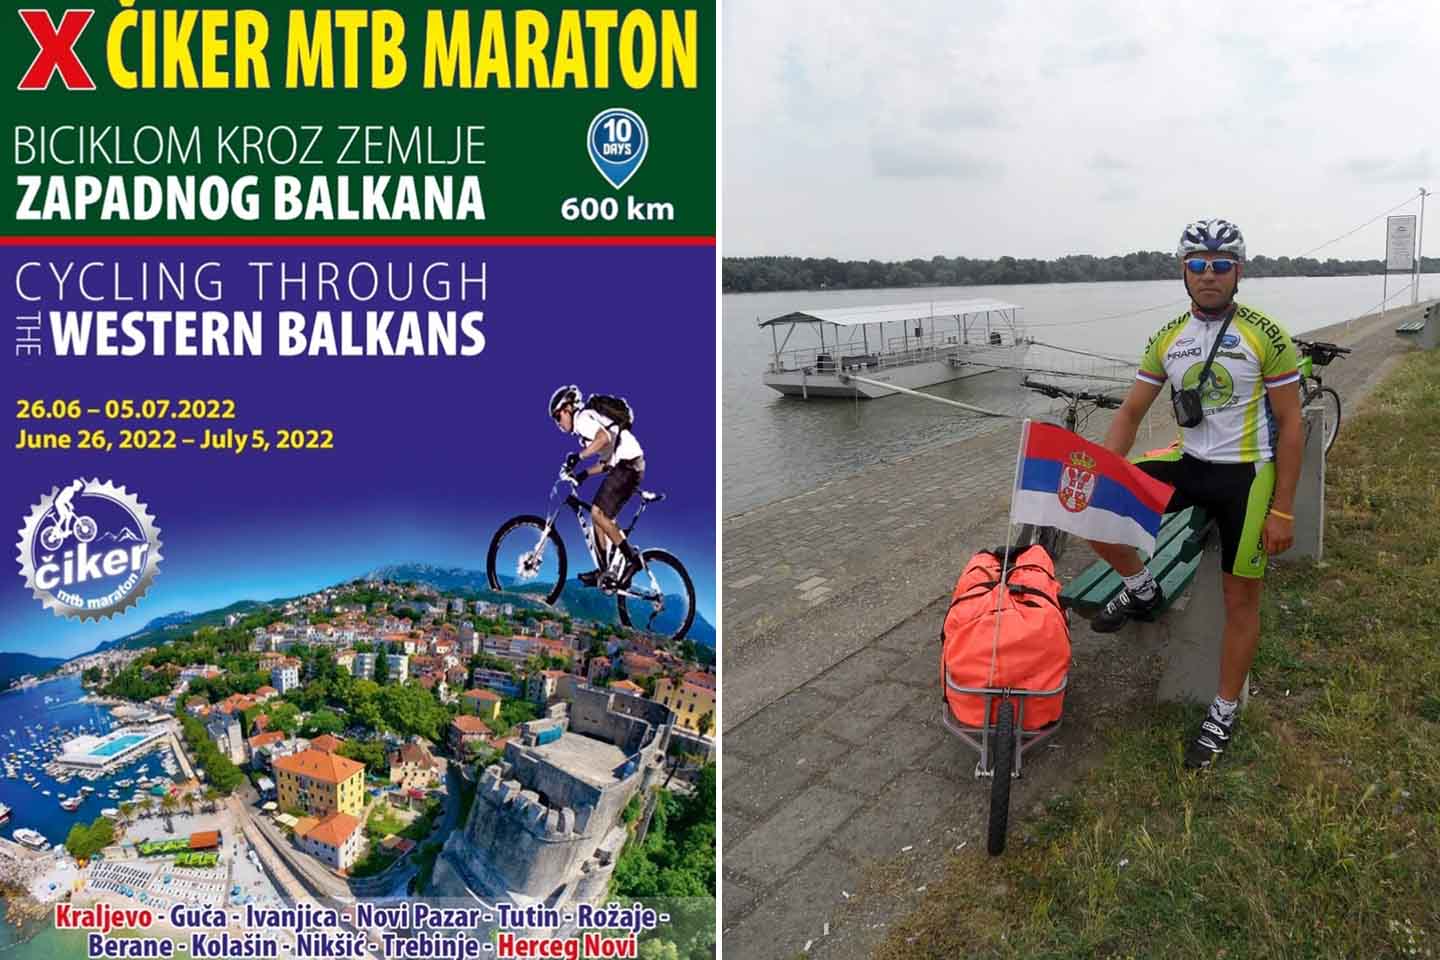 Biciklizam: Aleksandar Đurišić iz Sefkerina na Čiker MTB maratonu